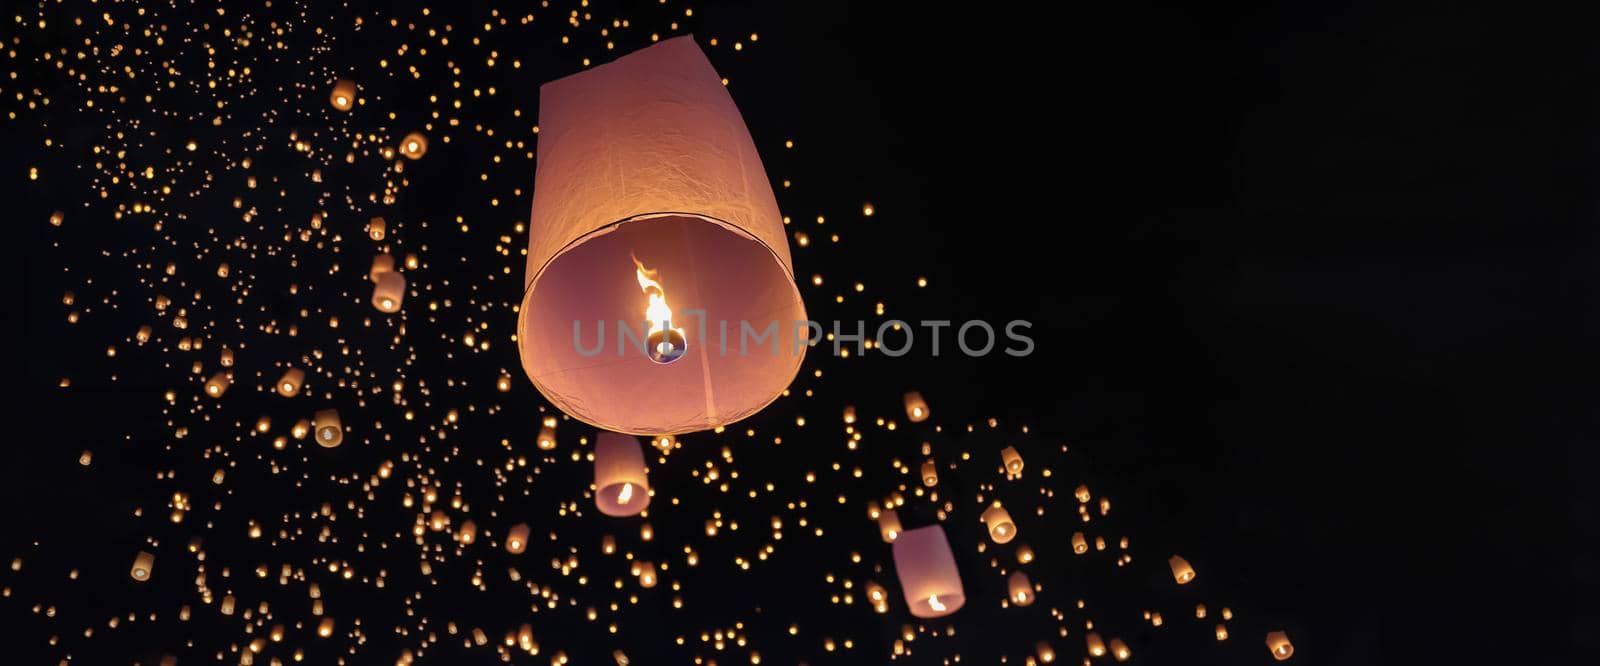 Tourist floating sky lanterns in Loy Krathong festival , Chiang Mai ,Thailand.